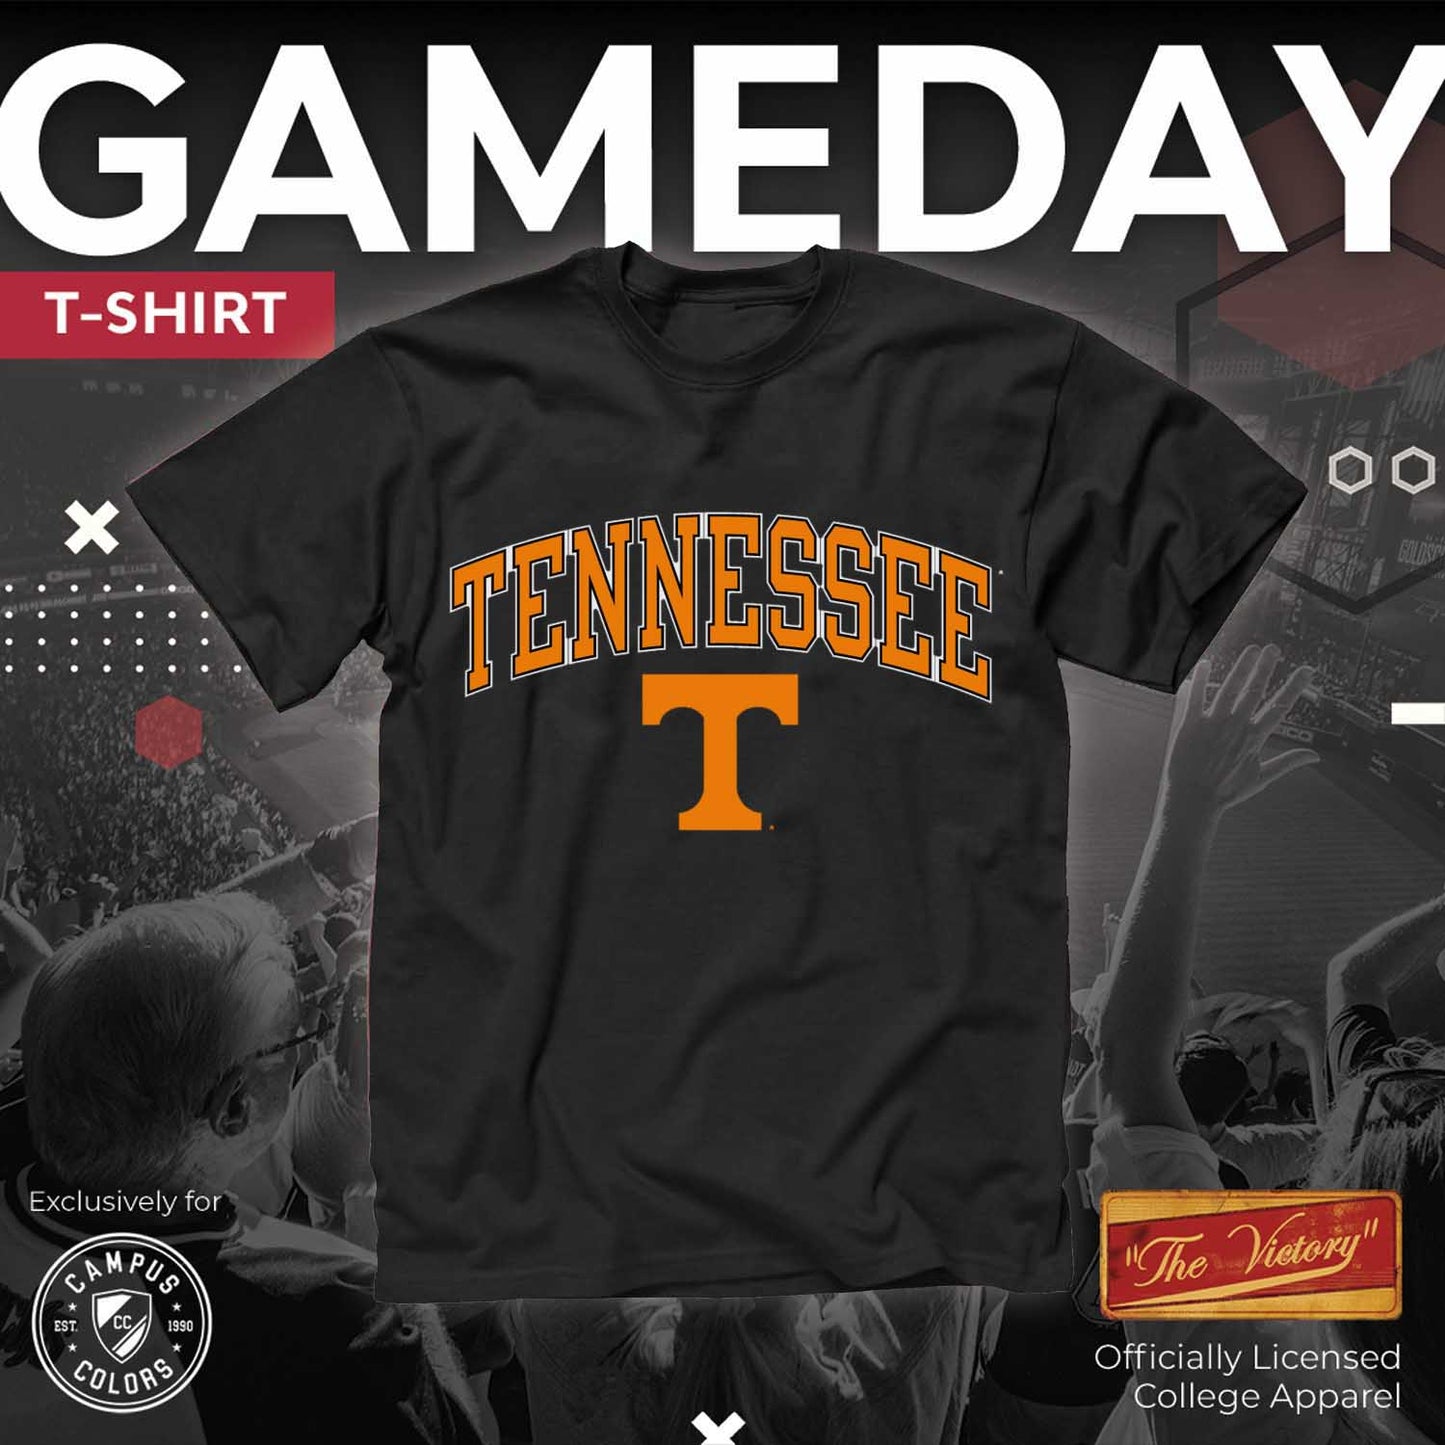 Tennessee Volunteers NCAA Adult Gameday Cotton T-Shirt - Black